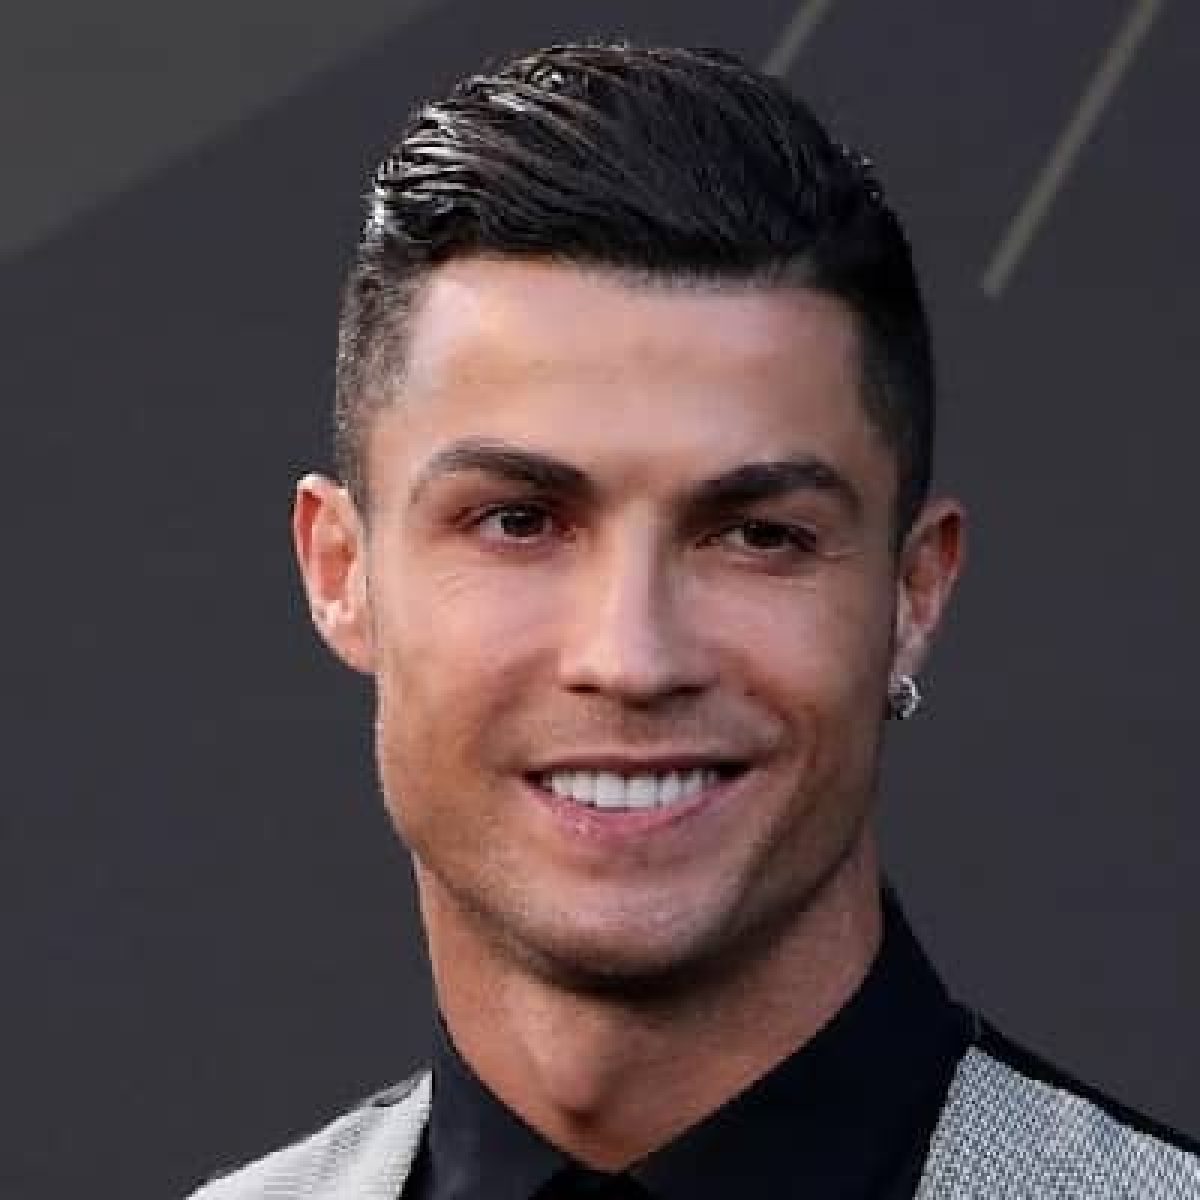 Cristiano Ronaldo - Bio, Age, Net Worth, Height, Married, Facts